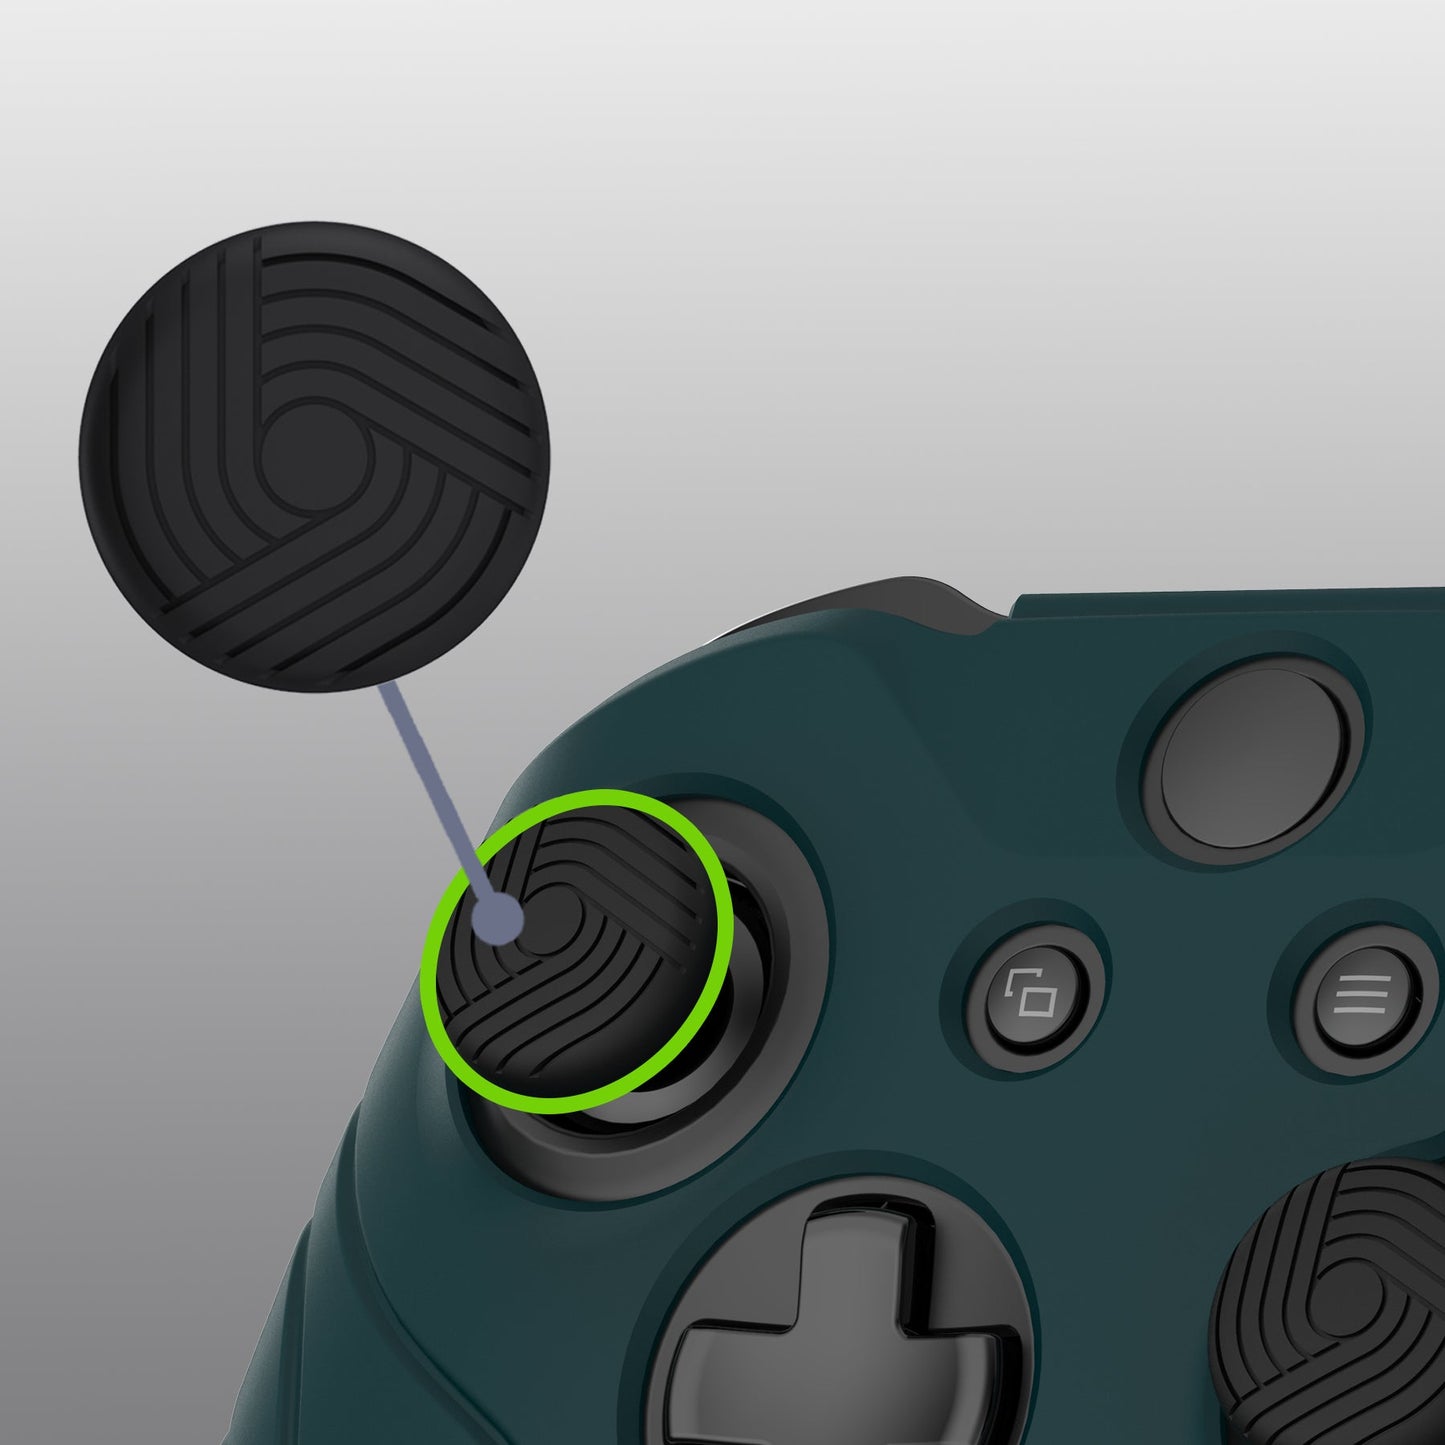 PlayVital Samurai Edition Racing Green Anti-Slip Controller Grip Silicone Skin for Xbox One X/S Controller, Ergonomic Soft Rubber Protective Case Cover for Xbox One S/X Controller with Black Thumb Stick Caps - XOQ037 playvital